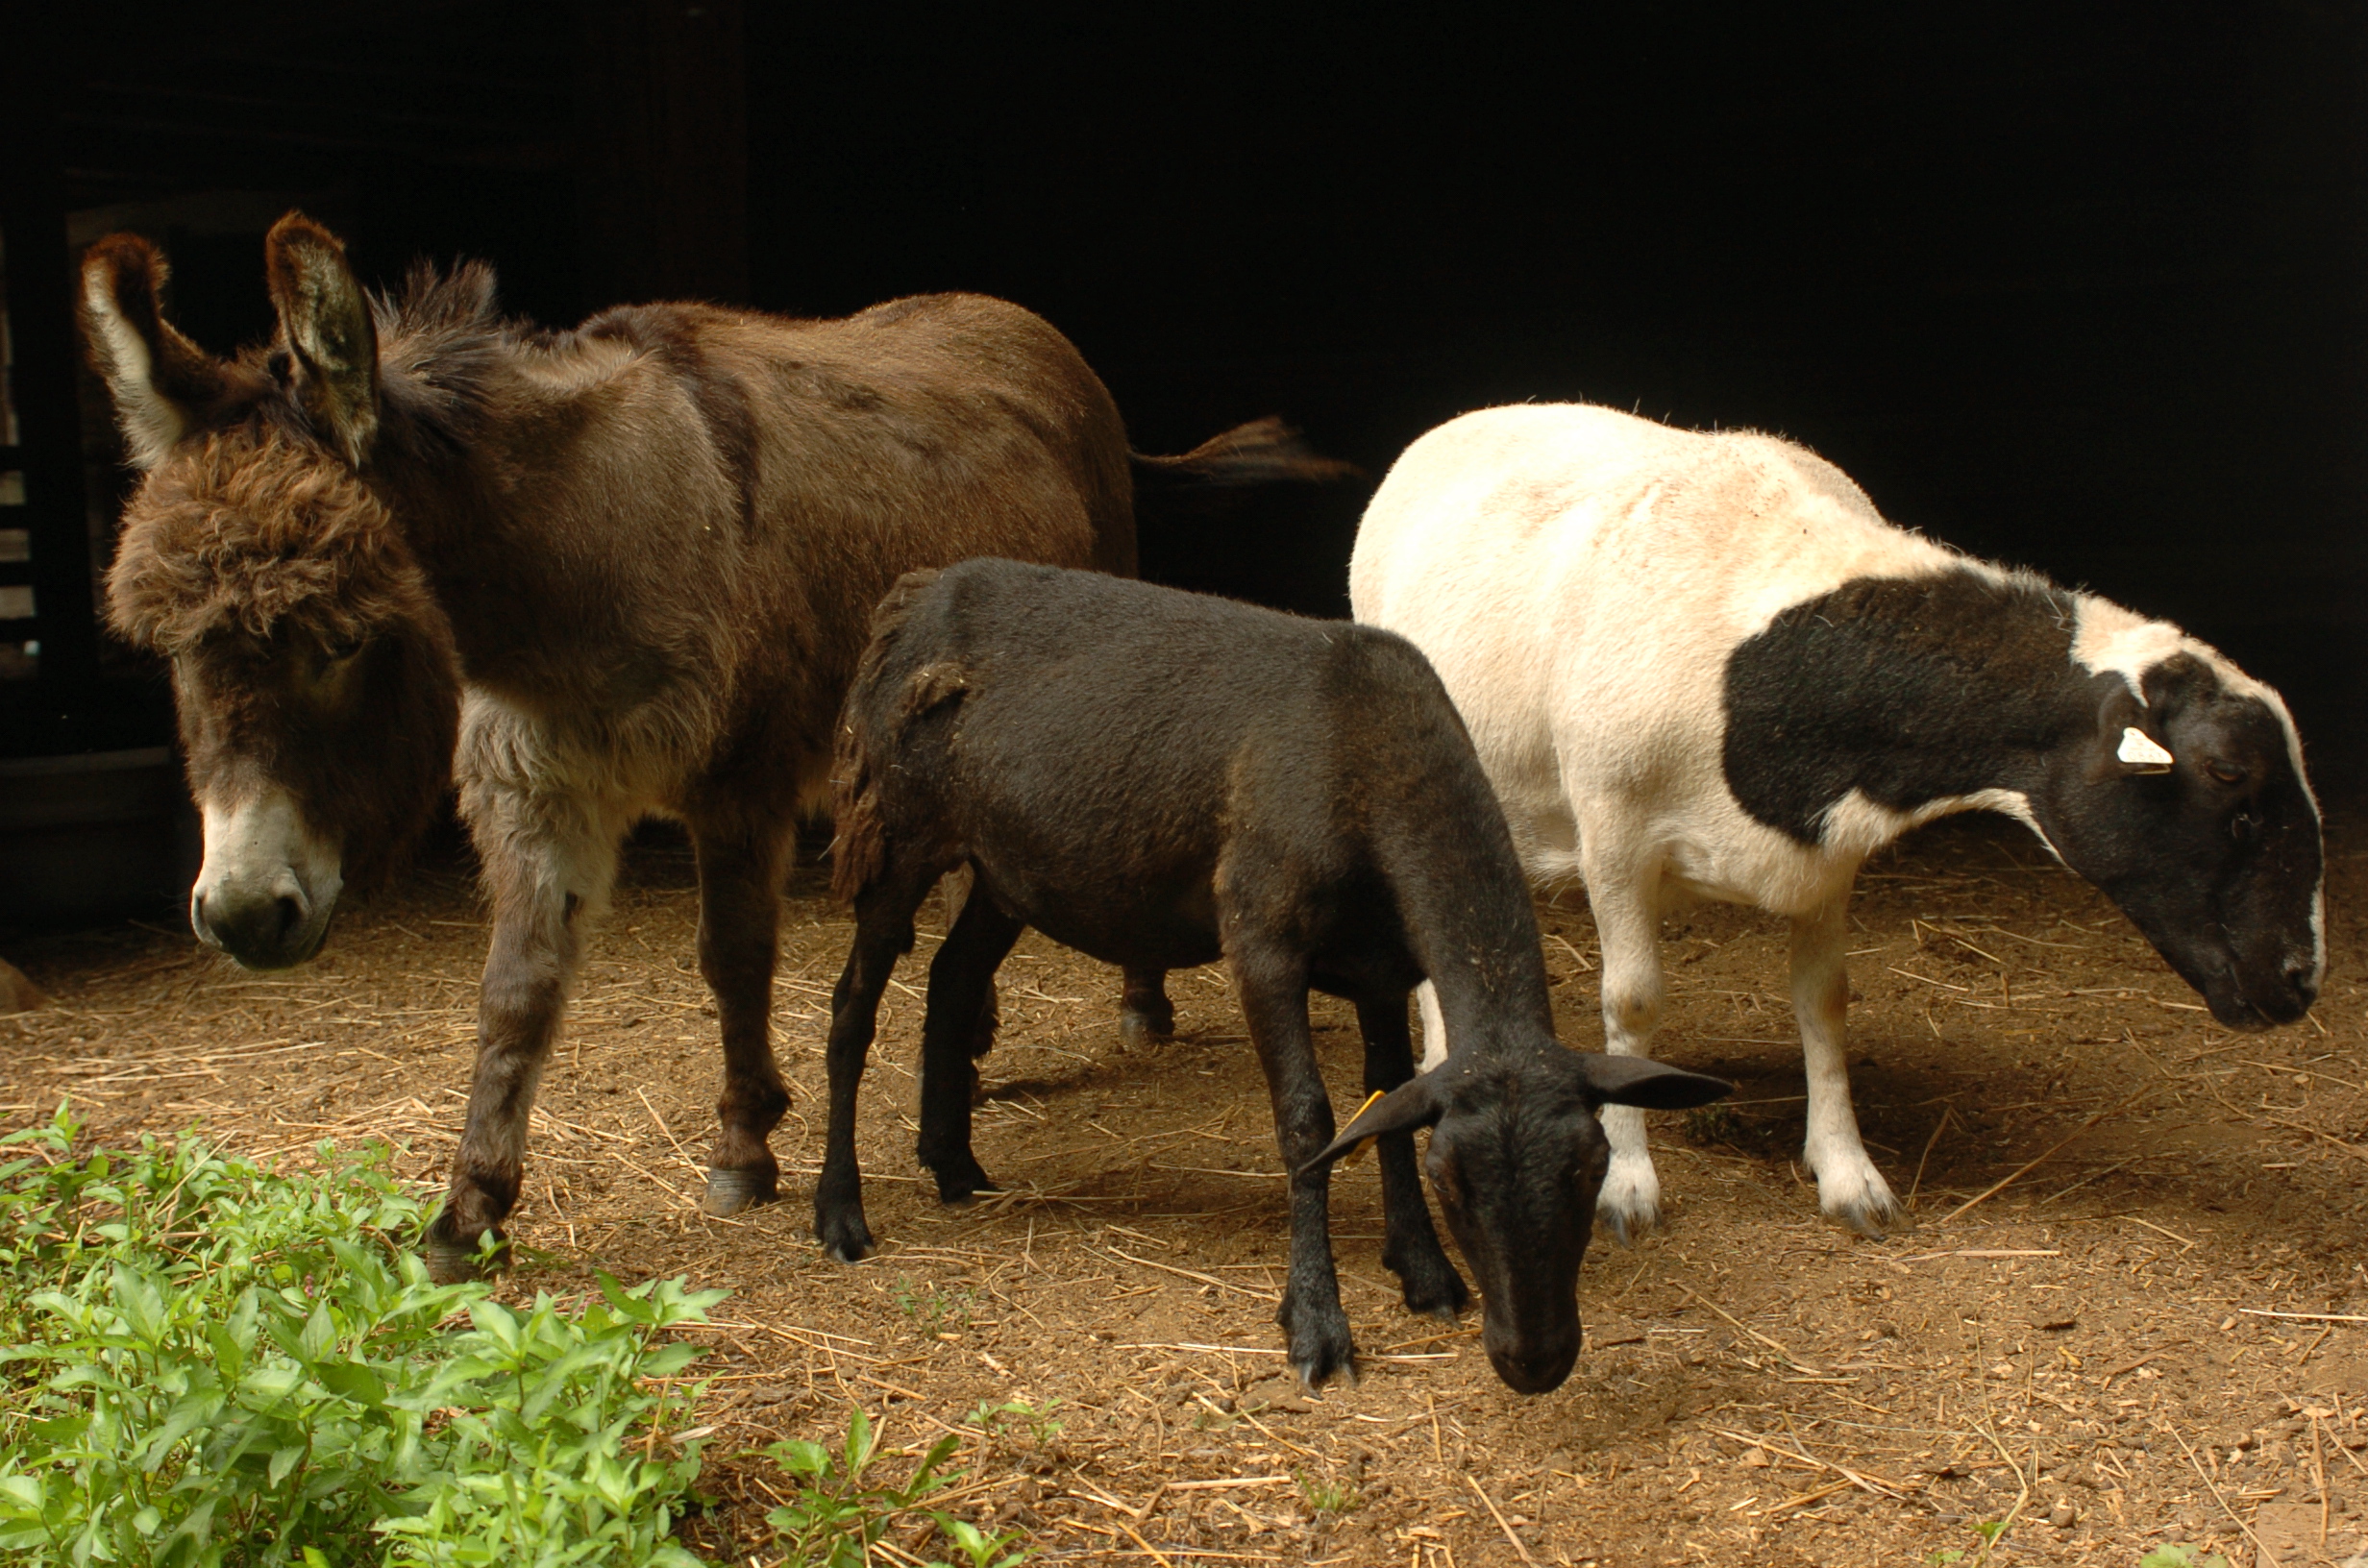 A brown donkey, brown sheep, and white sheep